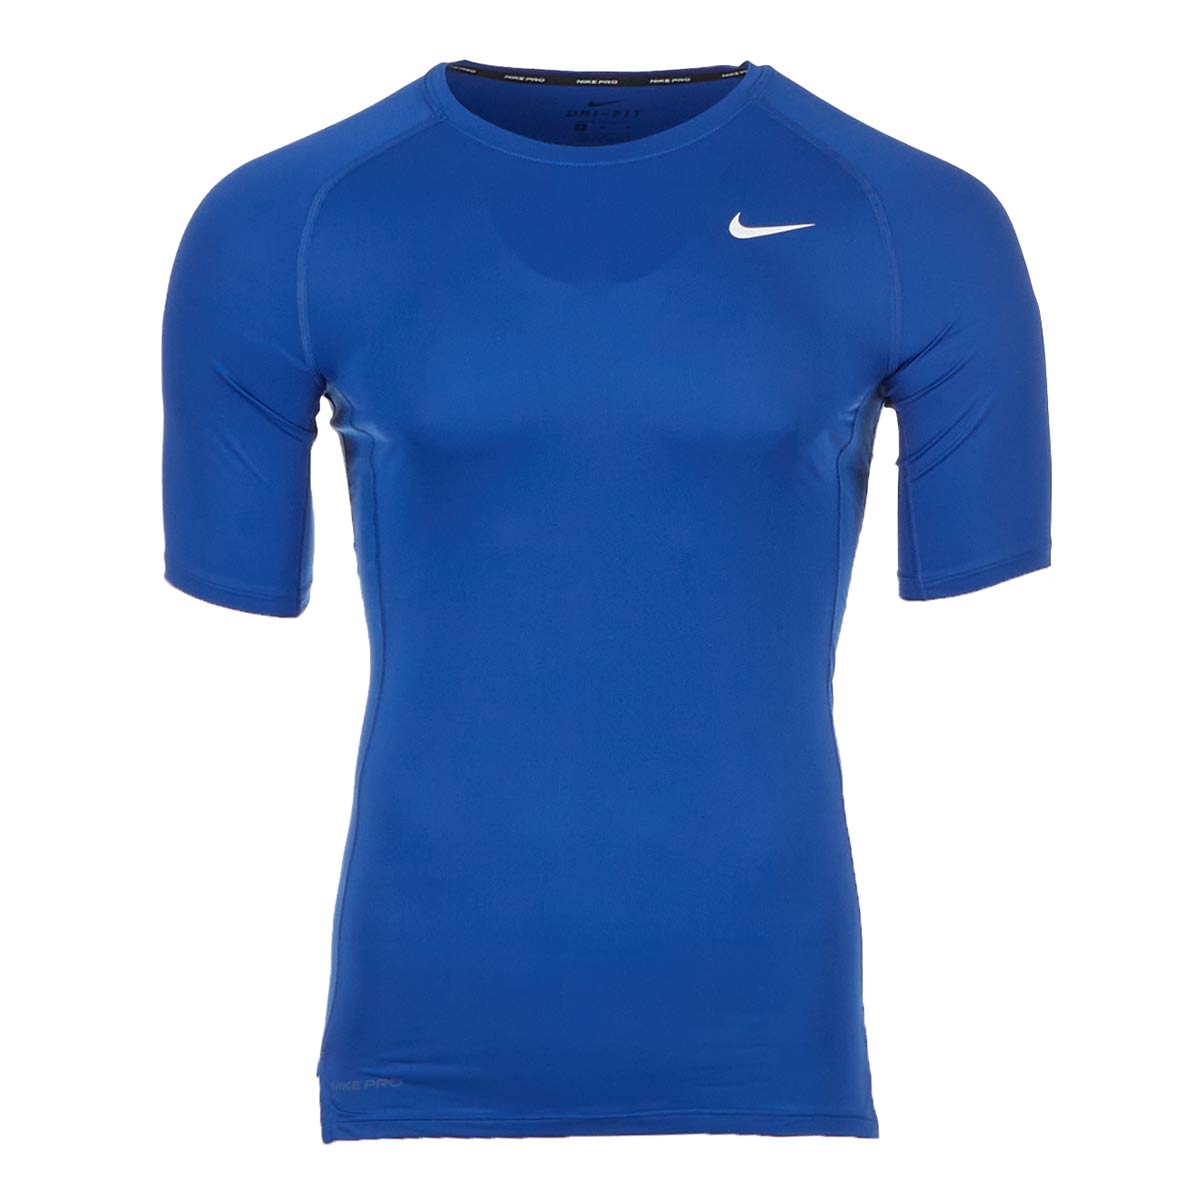 Image of Nike Men's Compression Top